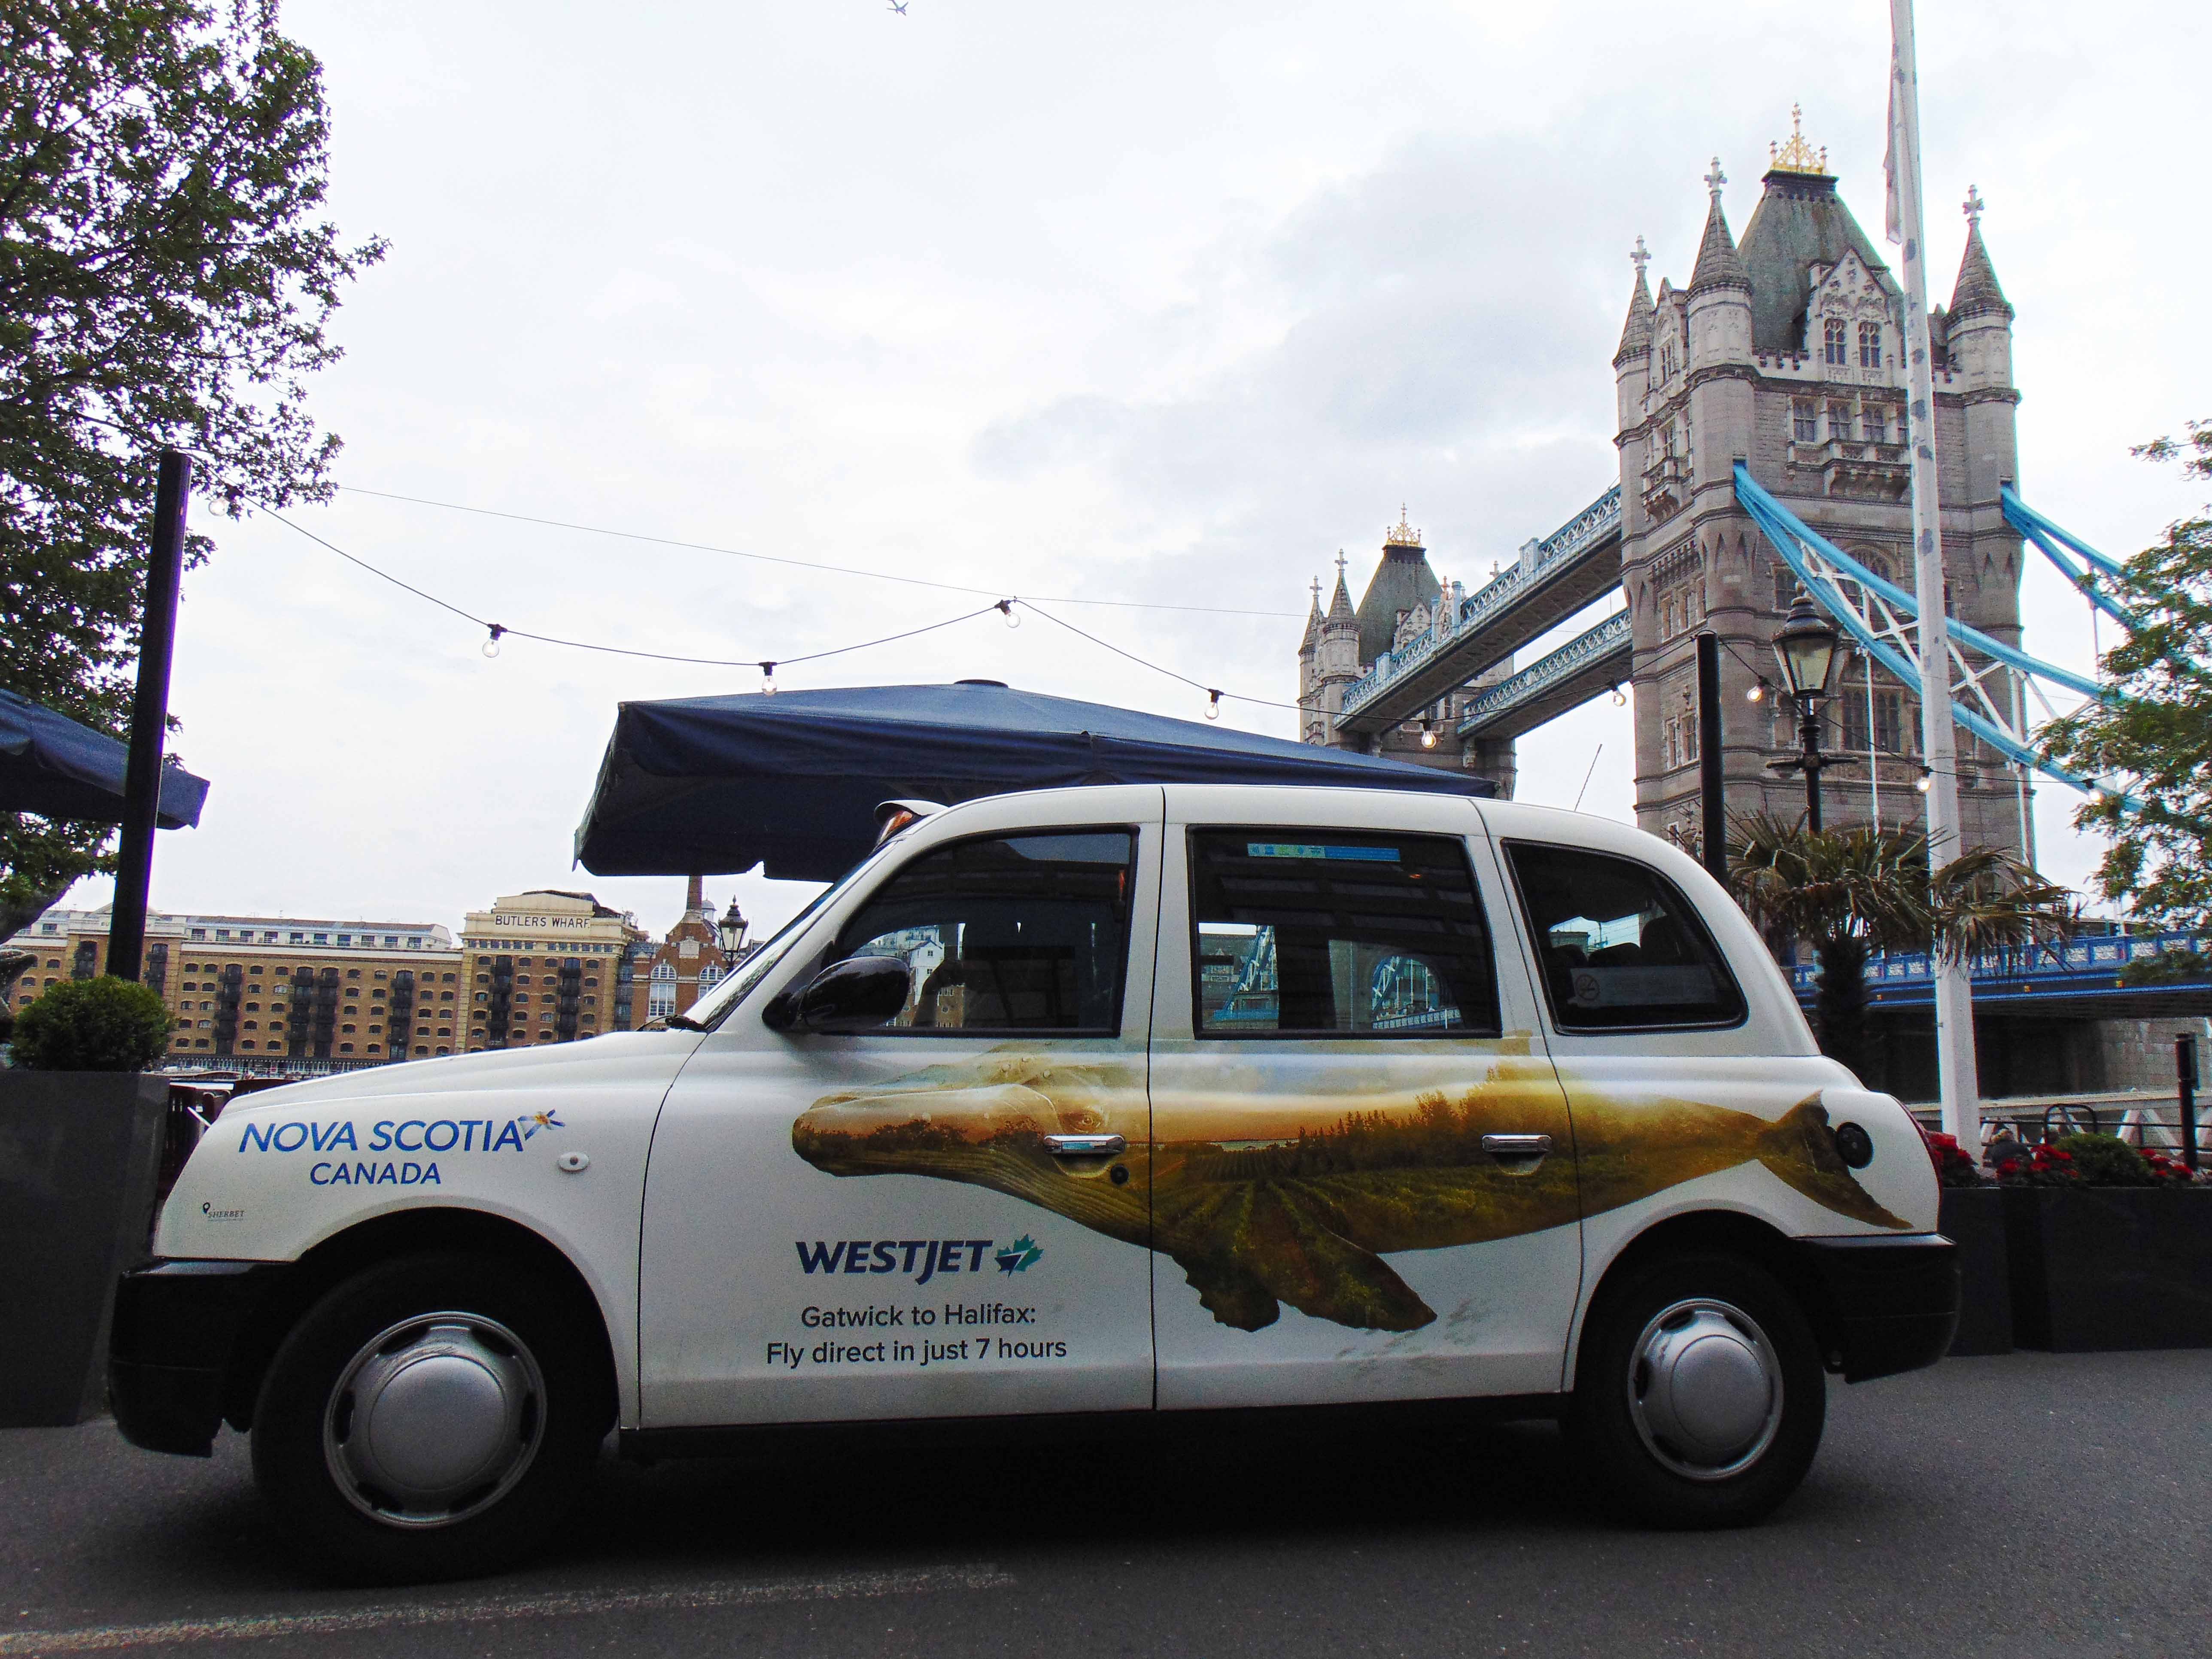 Nova Scotia branded London Taxi